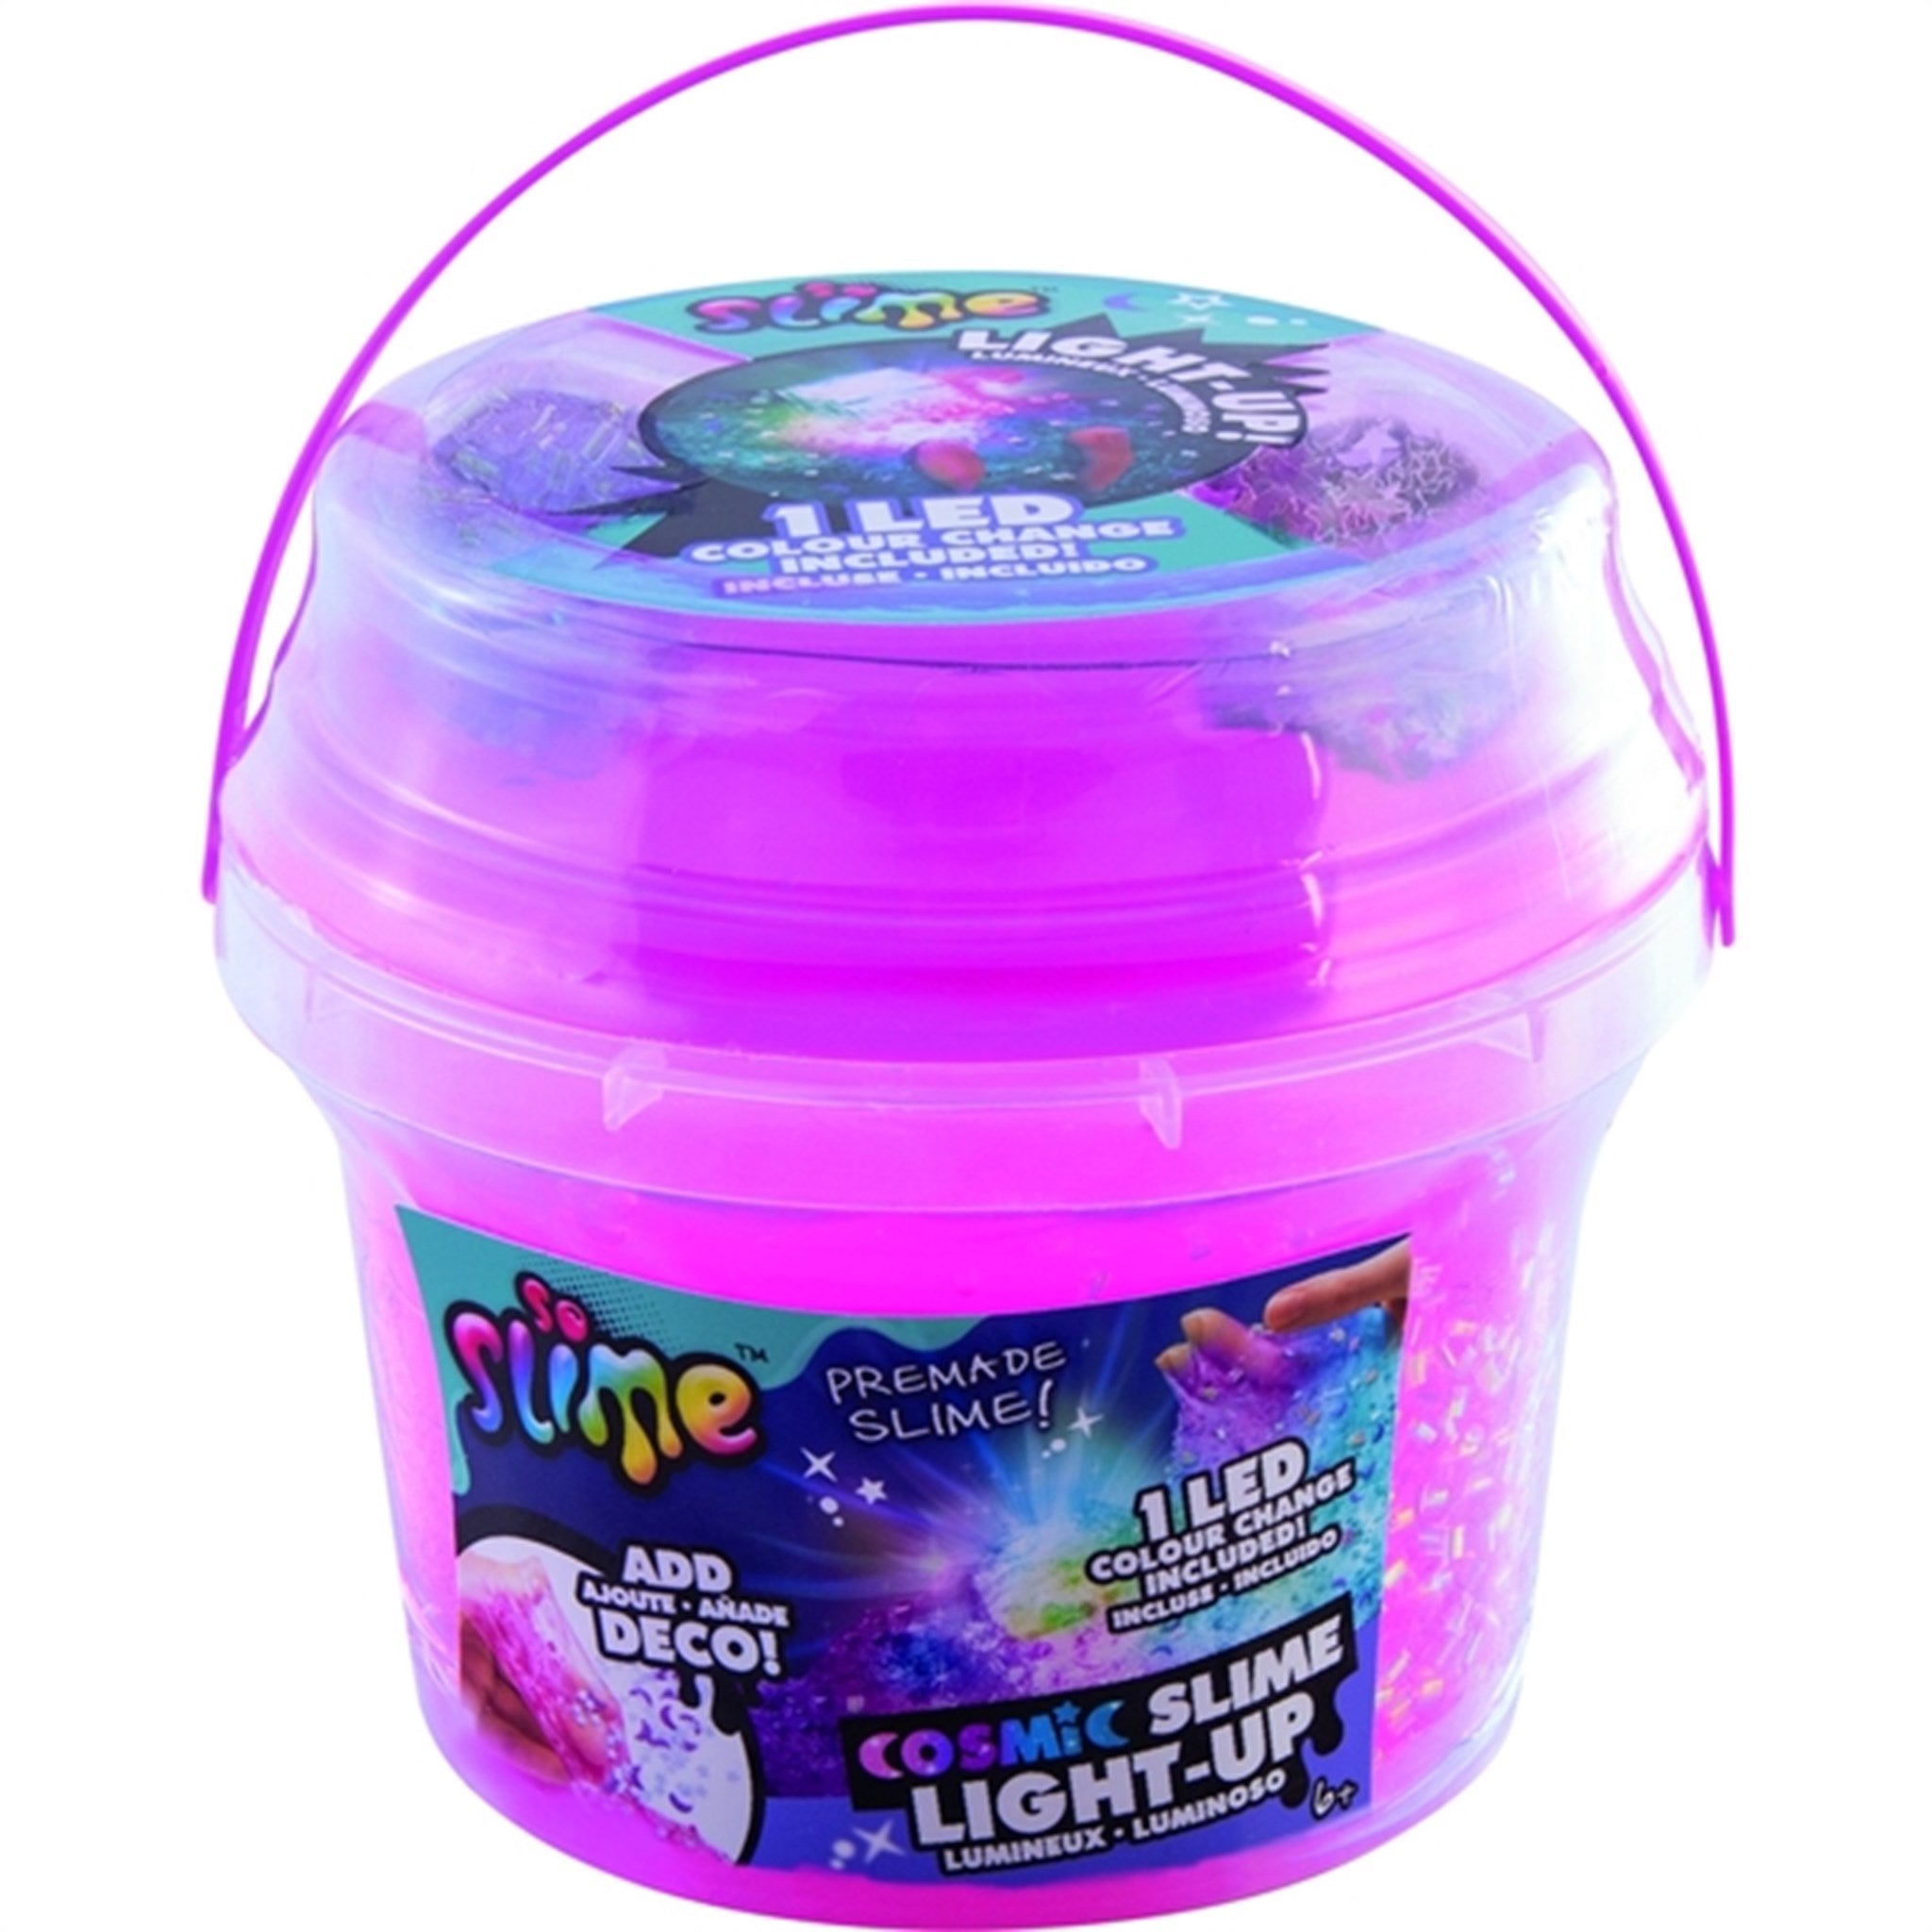 So Slime Light Up Cosmic Crunch Bucket Pink